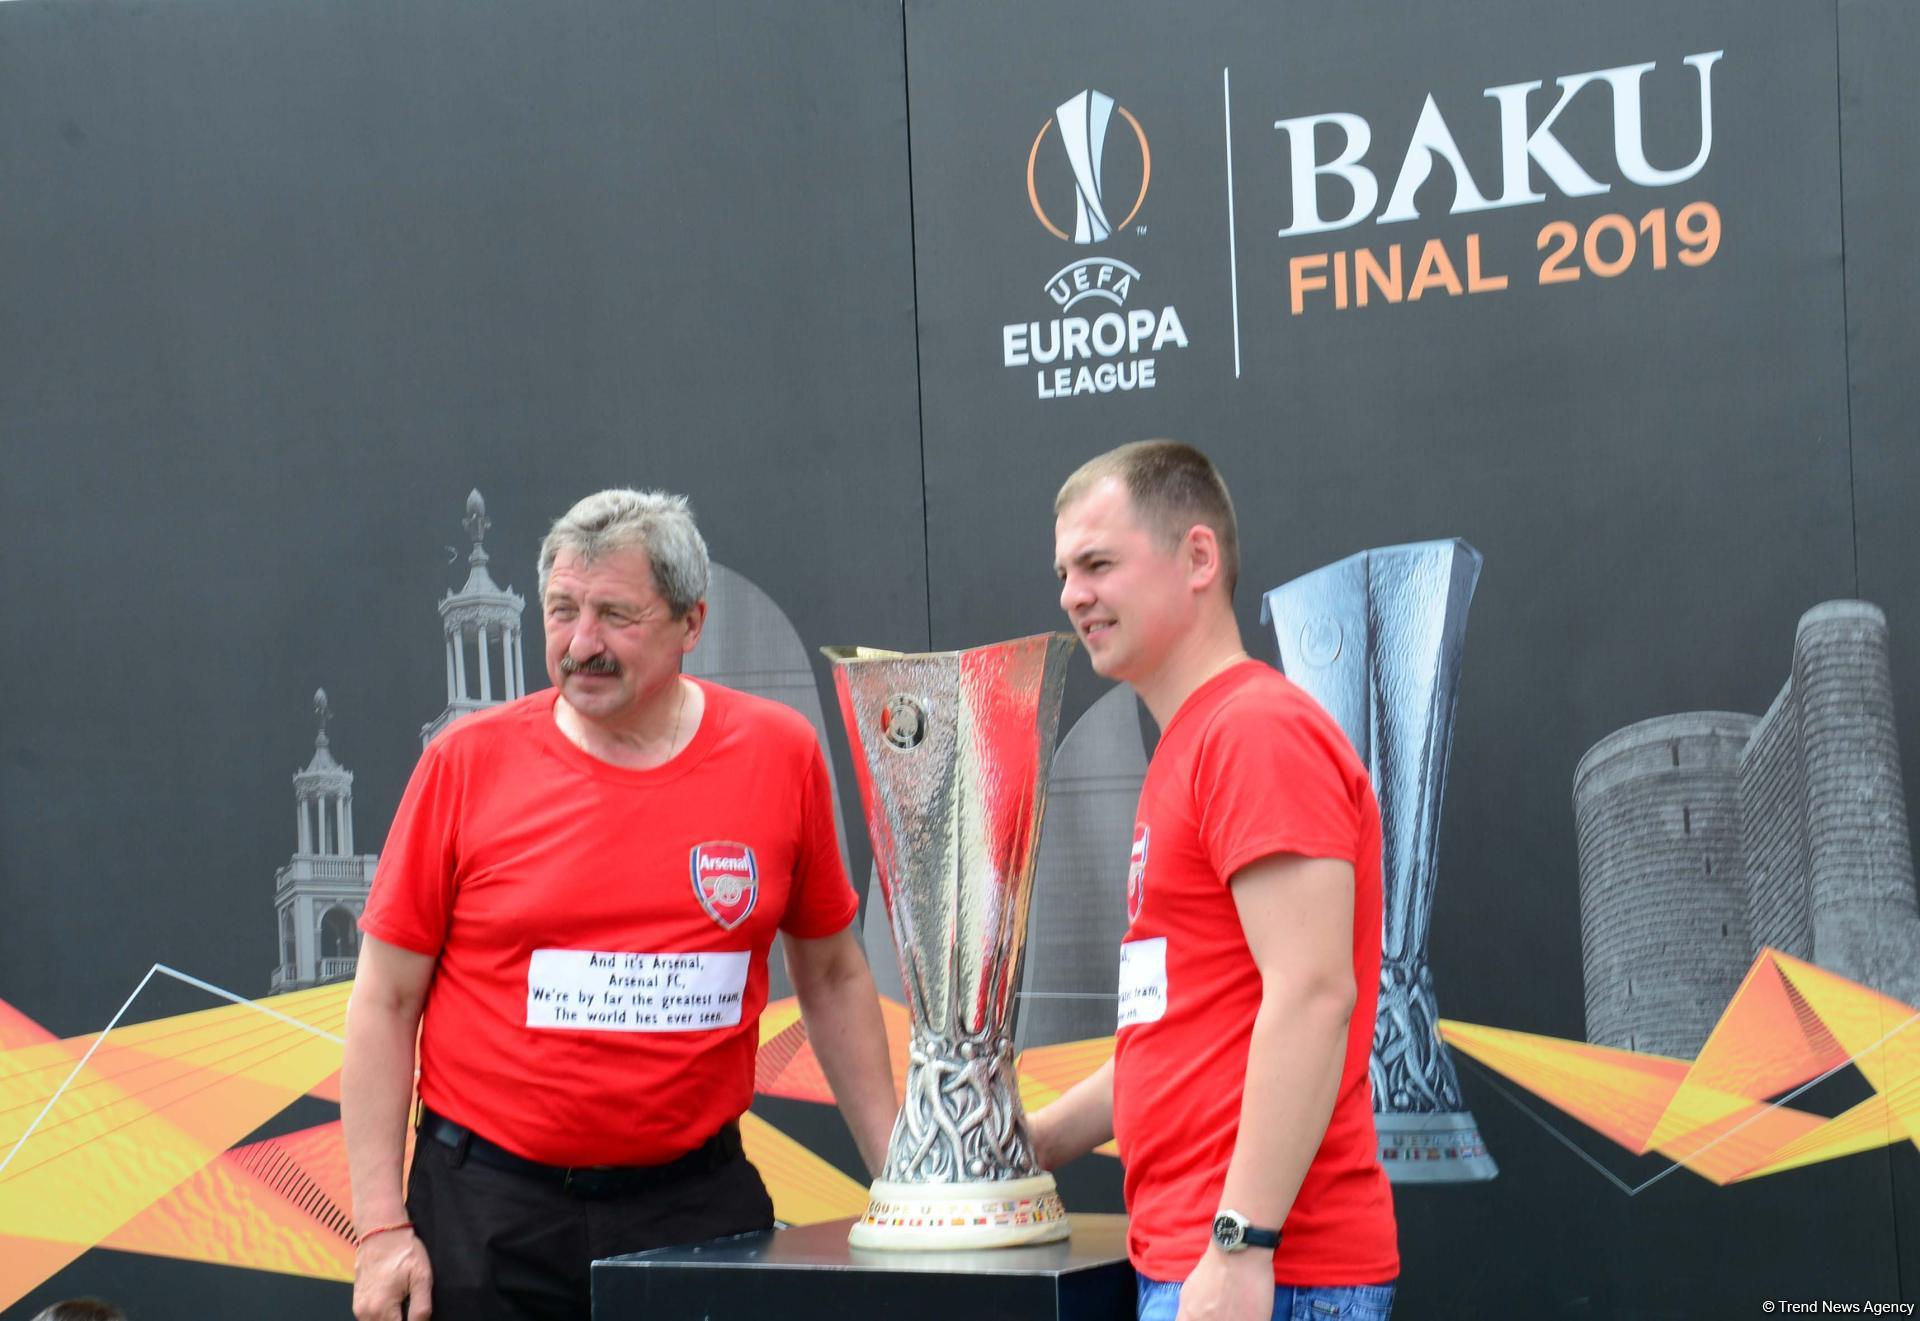 Few hours left before start of UEFA Europa League final match in Baku (PHOTO)